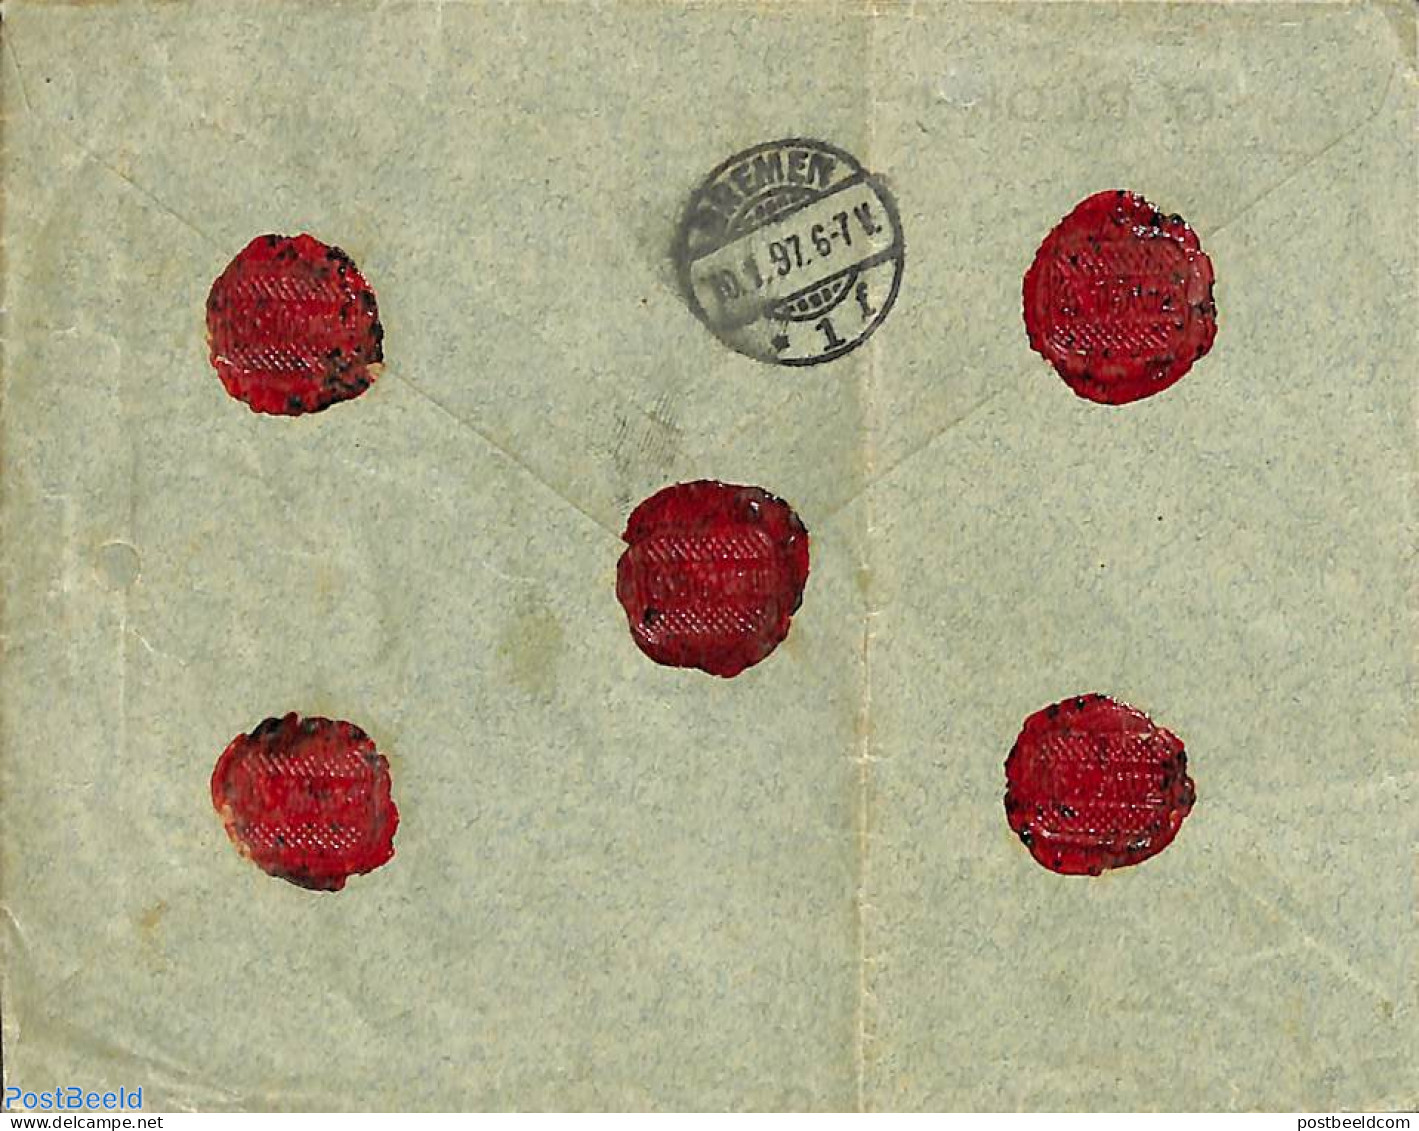 Netherlands 1897 Registered Cover From Amsterdam To Bremen. See Both Postmarks And Princess Wilhelmina (hangend Haar) .. - Storia Postale